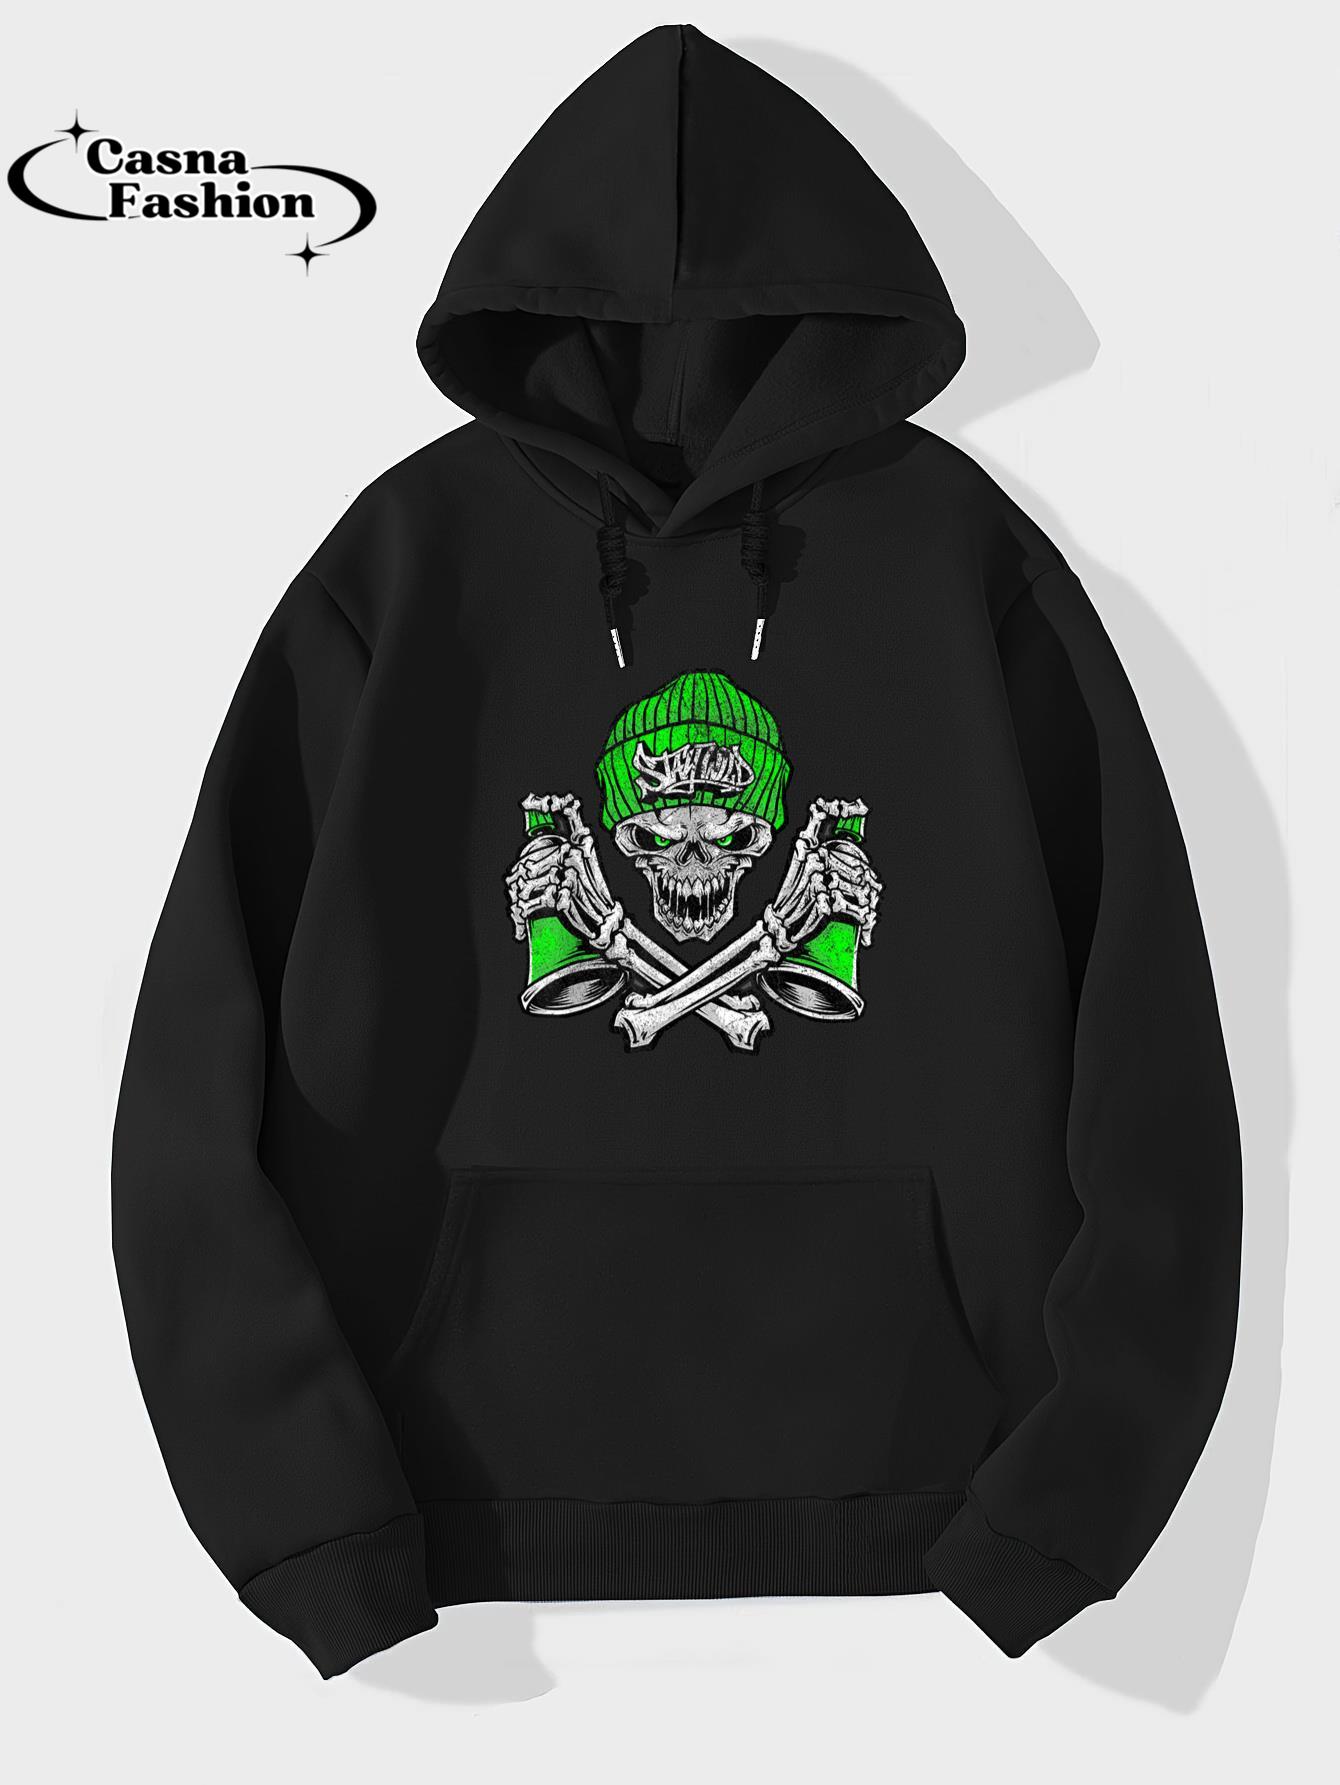 casnafashion_Hoodie_Graffiti Skull Graphic Tee Street Art Lover Tee Musician T-Shirt_hoodie_black hoodie